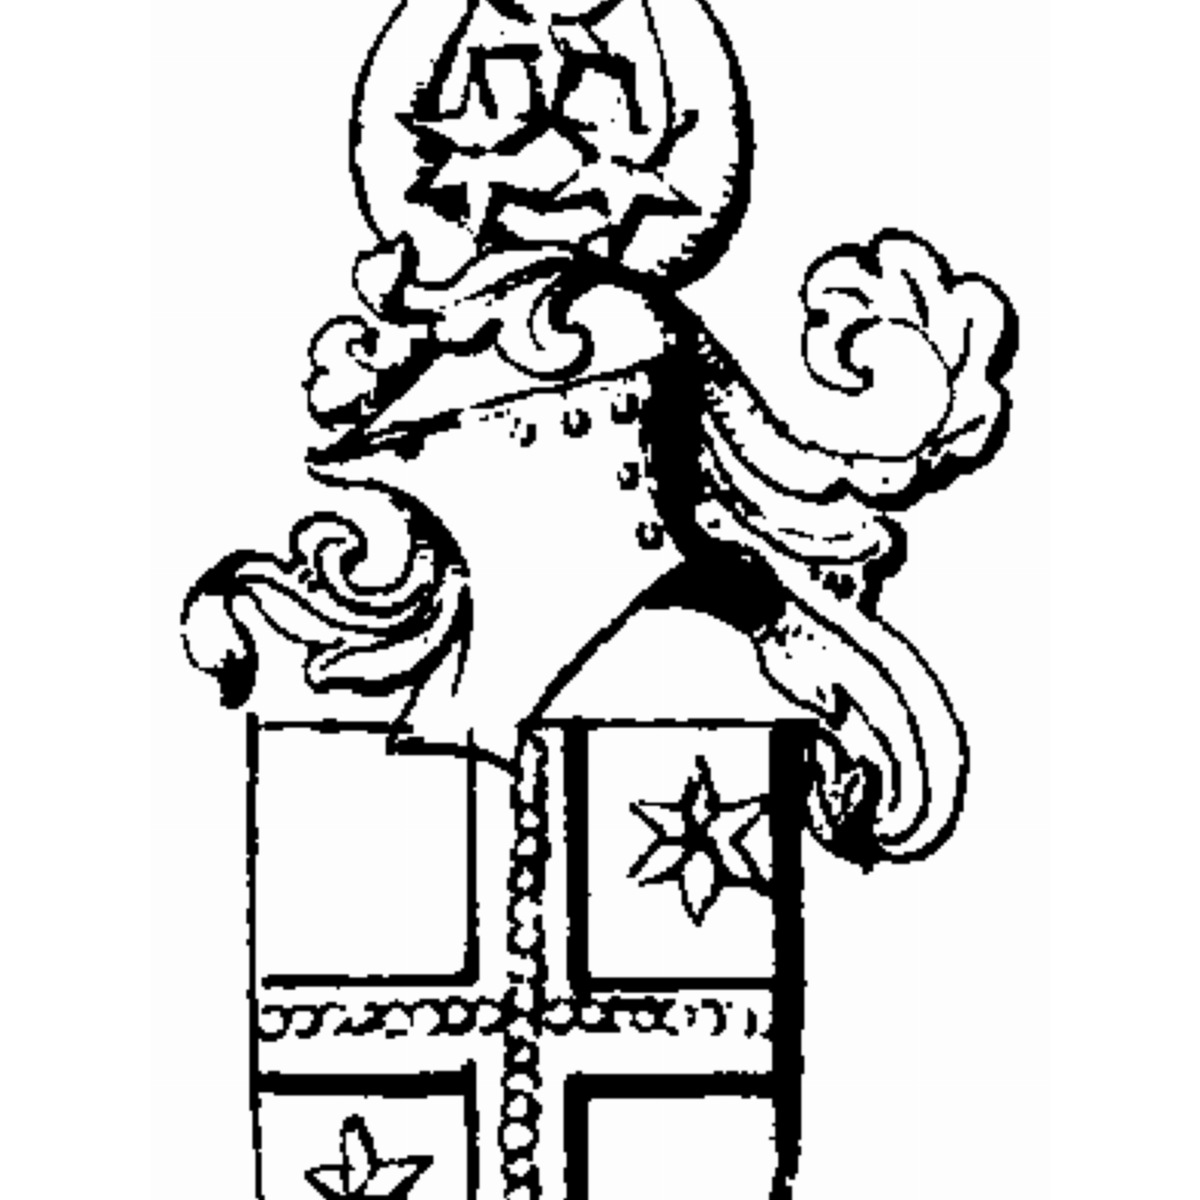 Wappen der Familie Lederhose